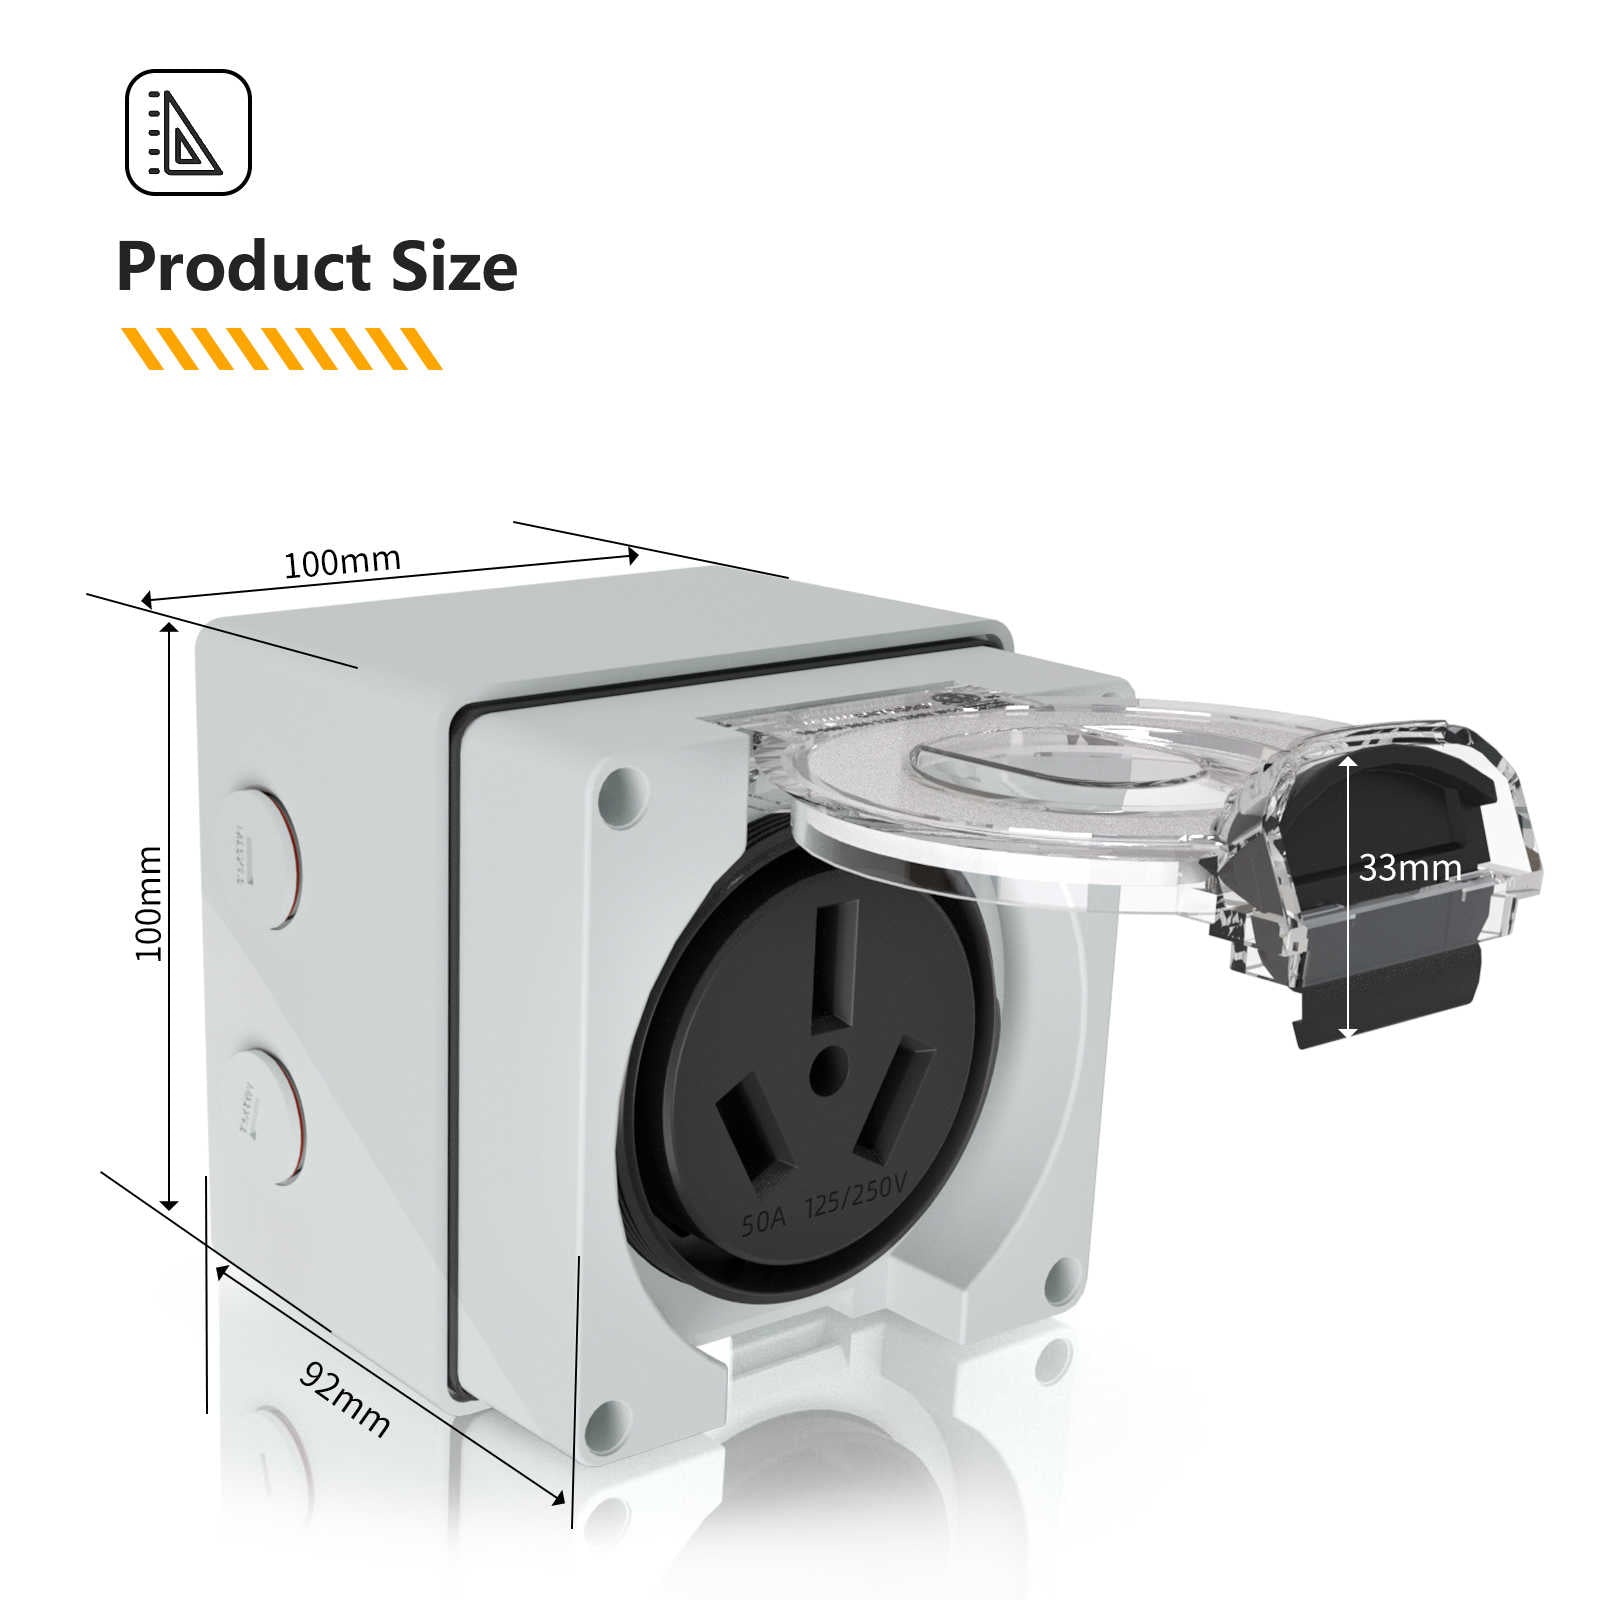 NEMA 10-50R 50Amp Power Outlet Box precise product size